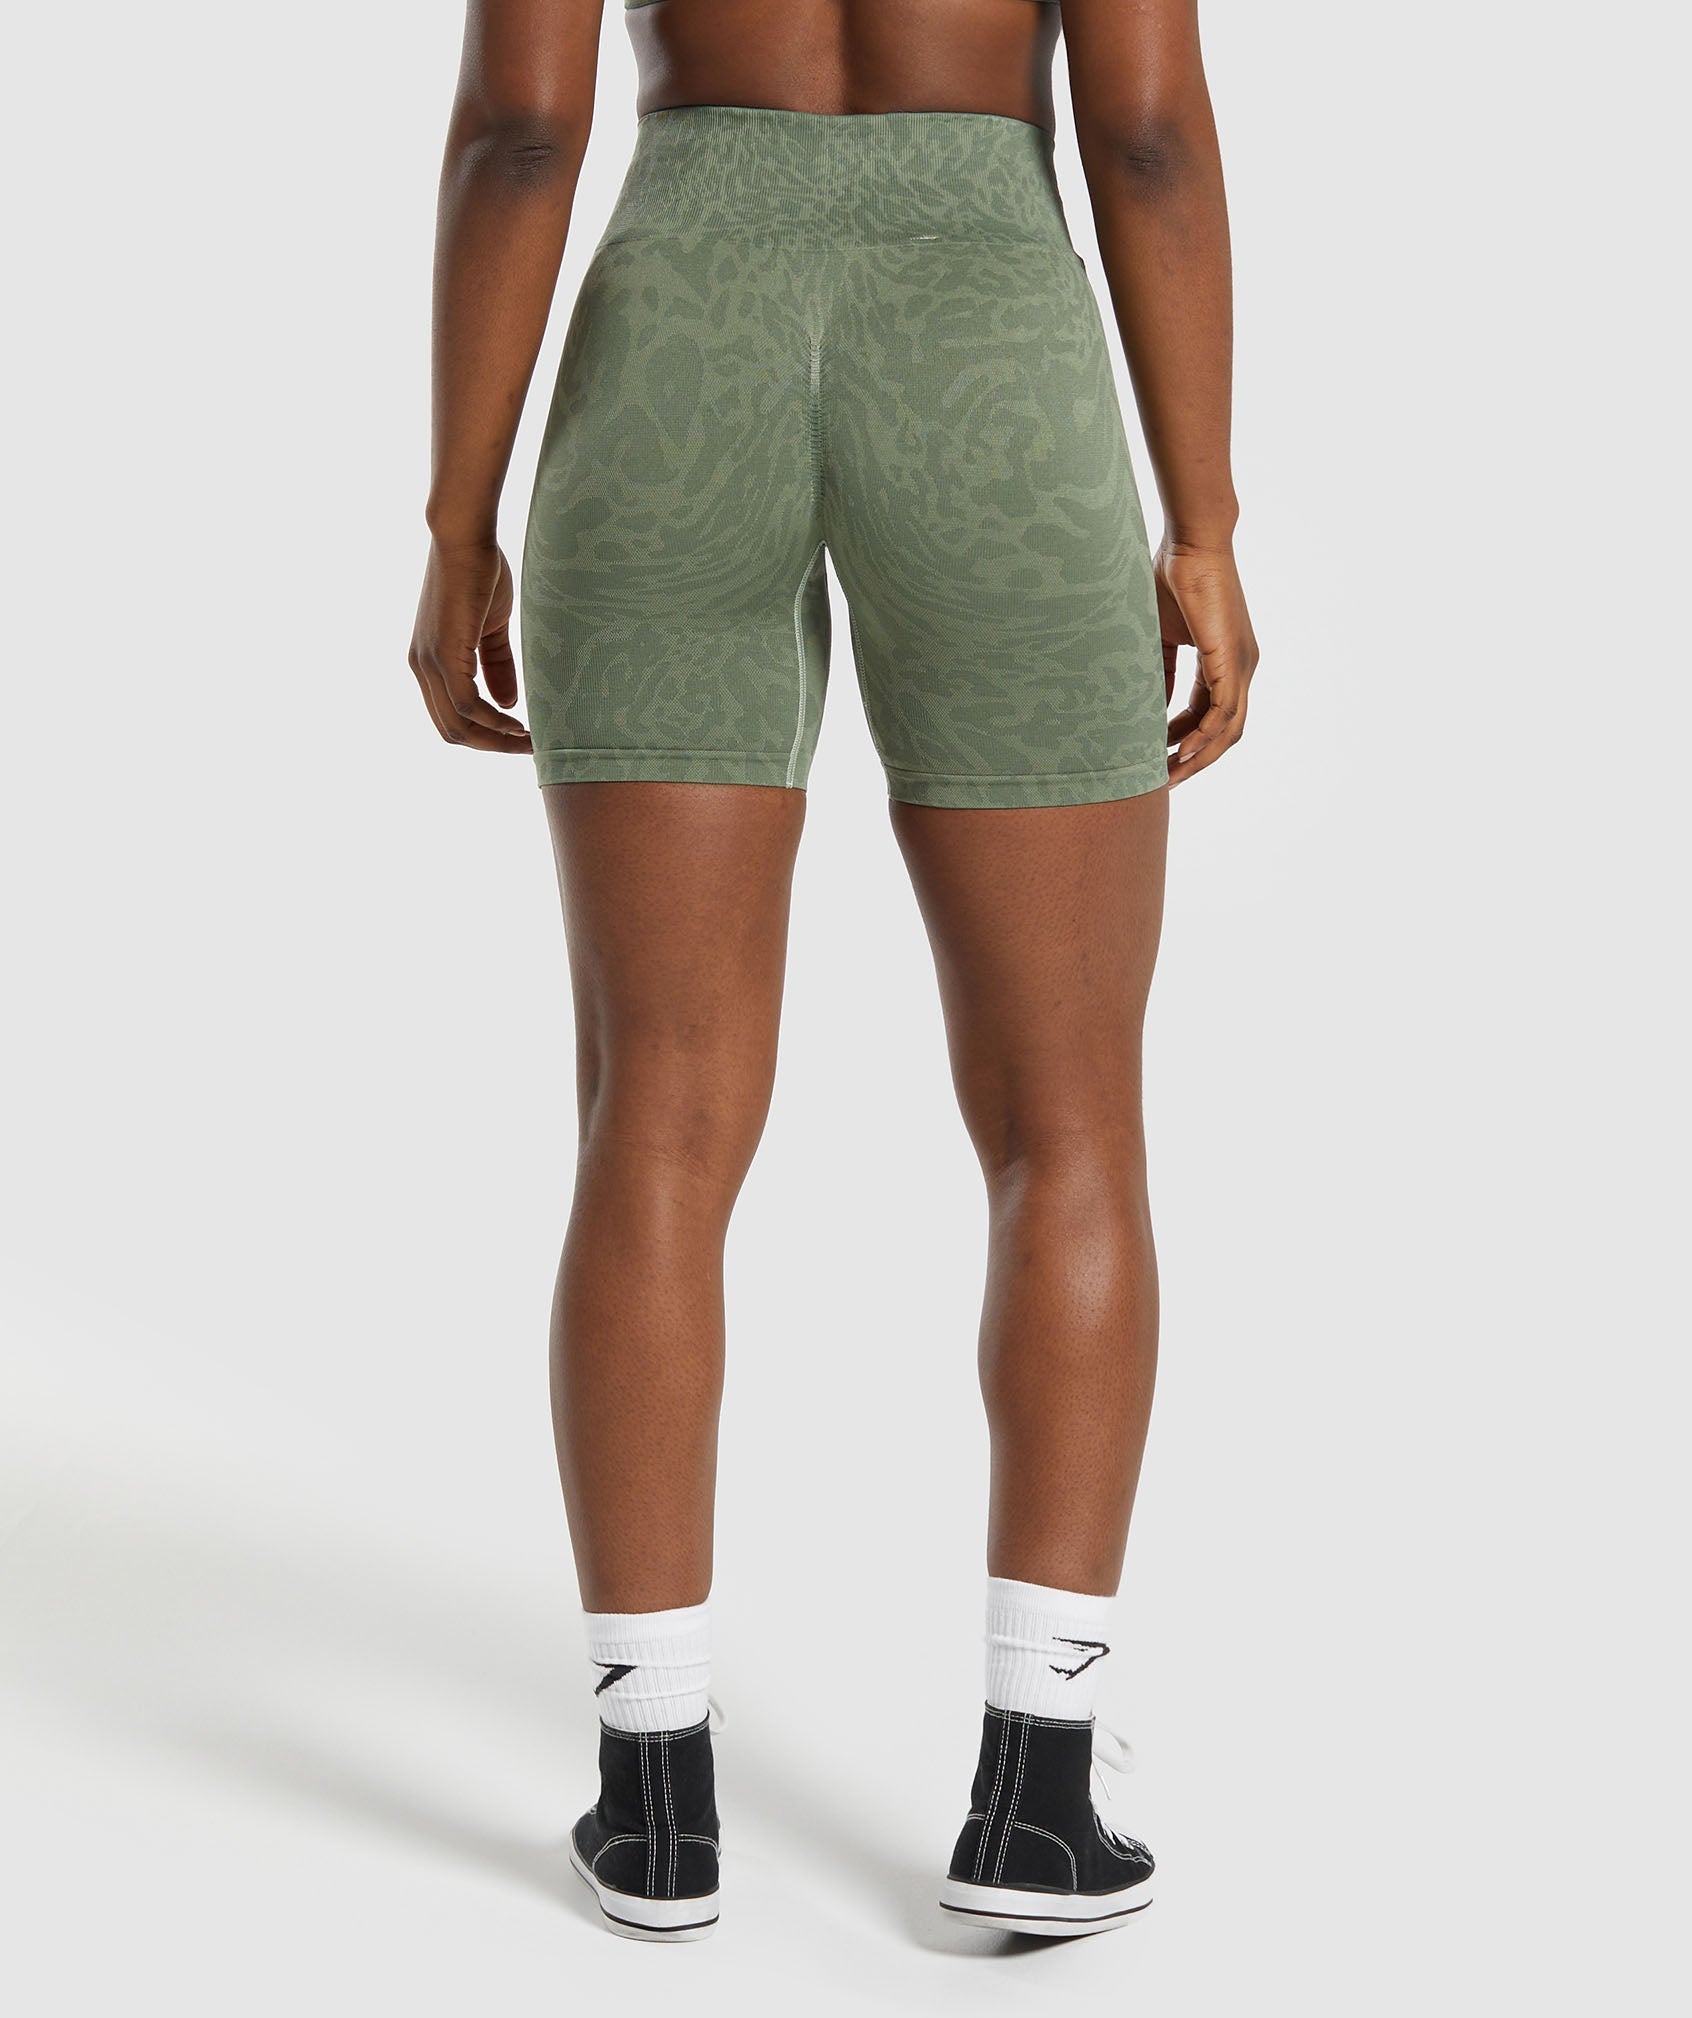 A24 Green Gym shorts Unisex mesh shorts with deep - Depop